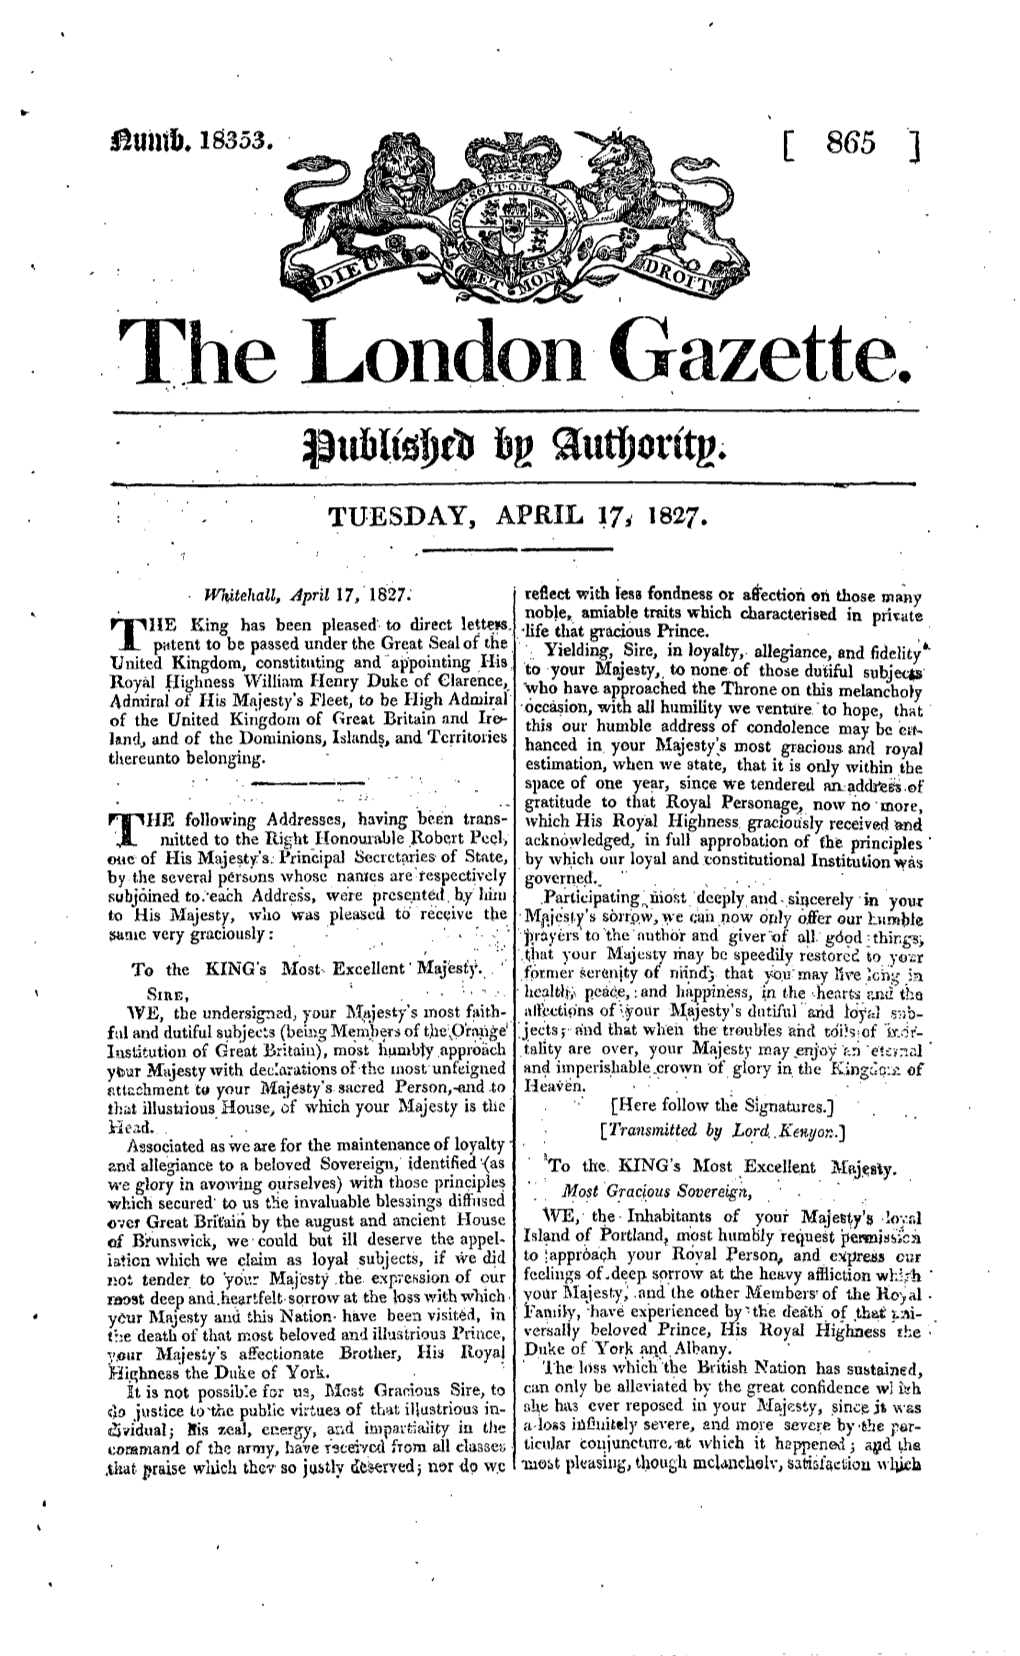 The London Gazette, Issue 18353